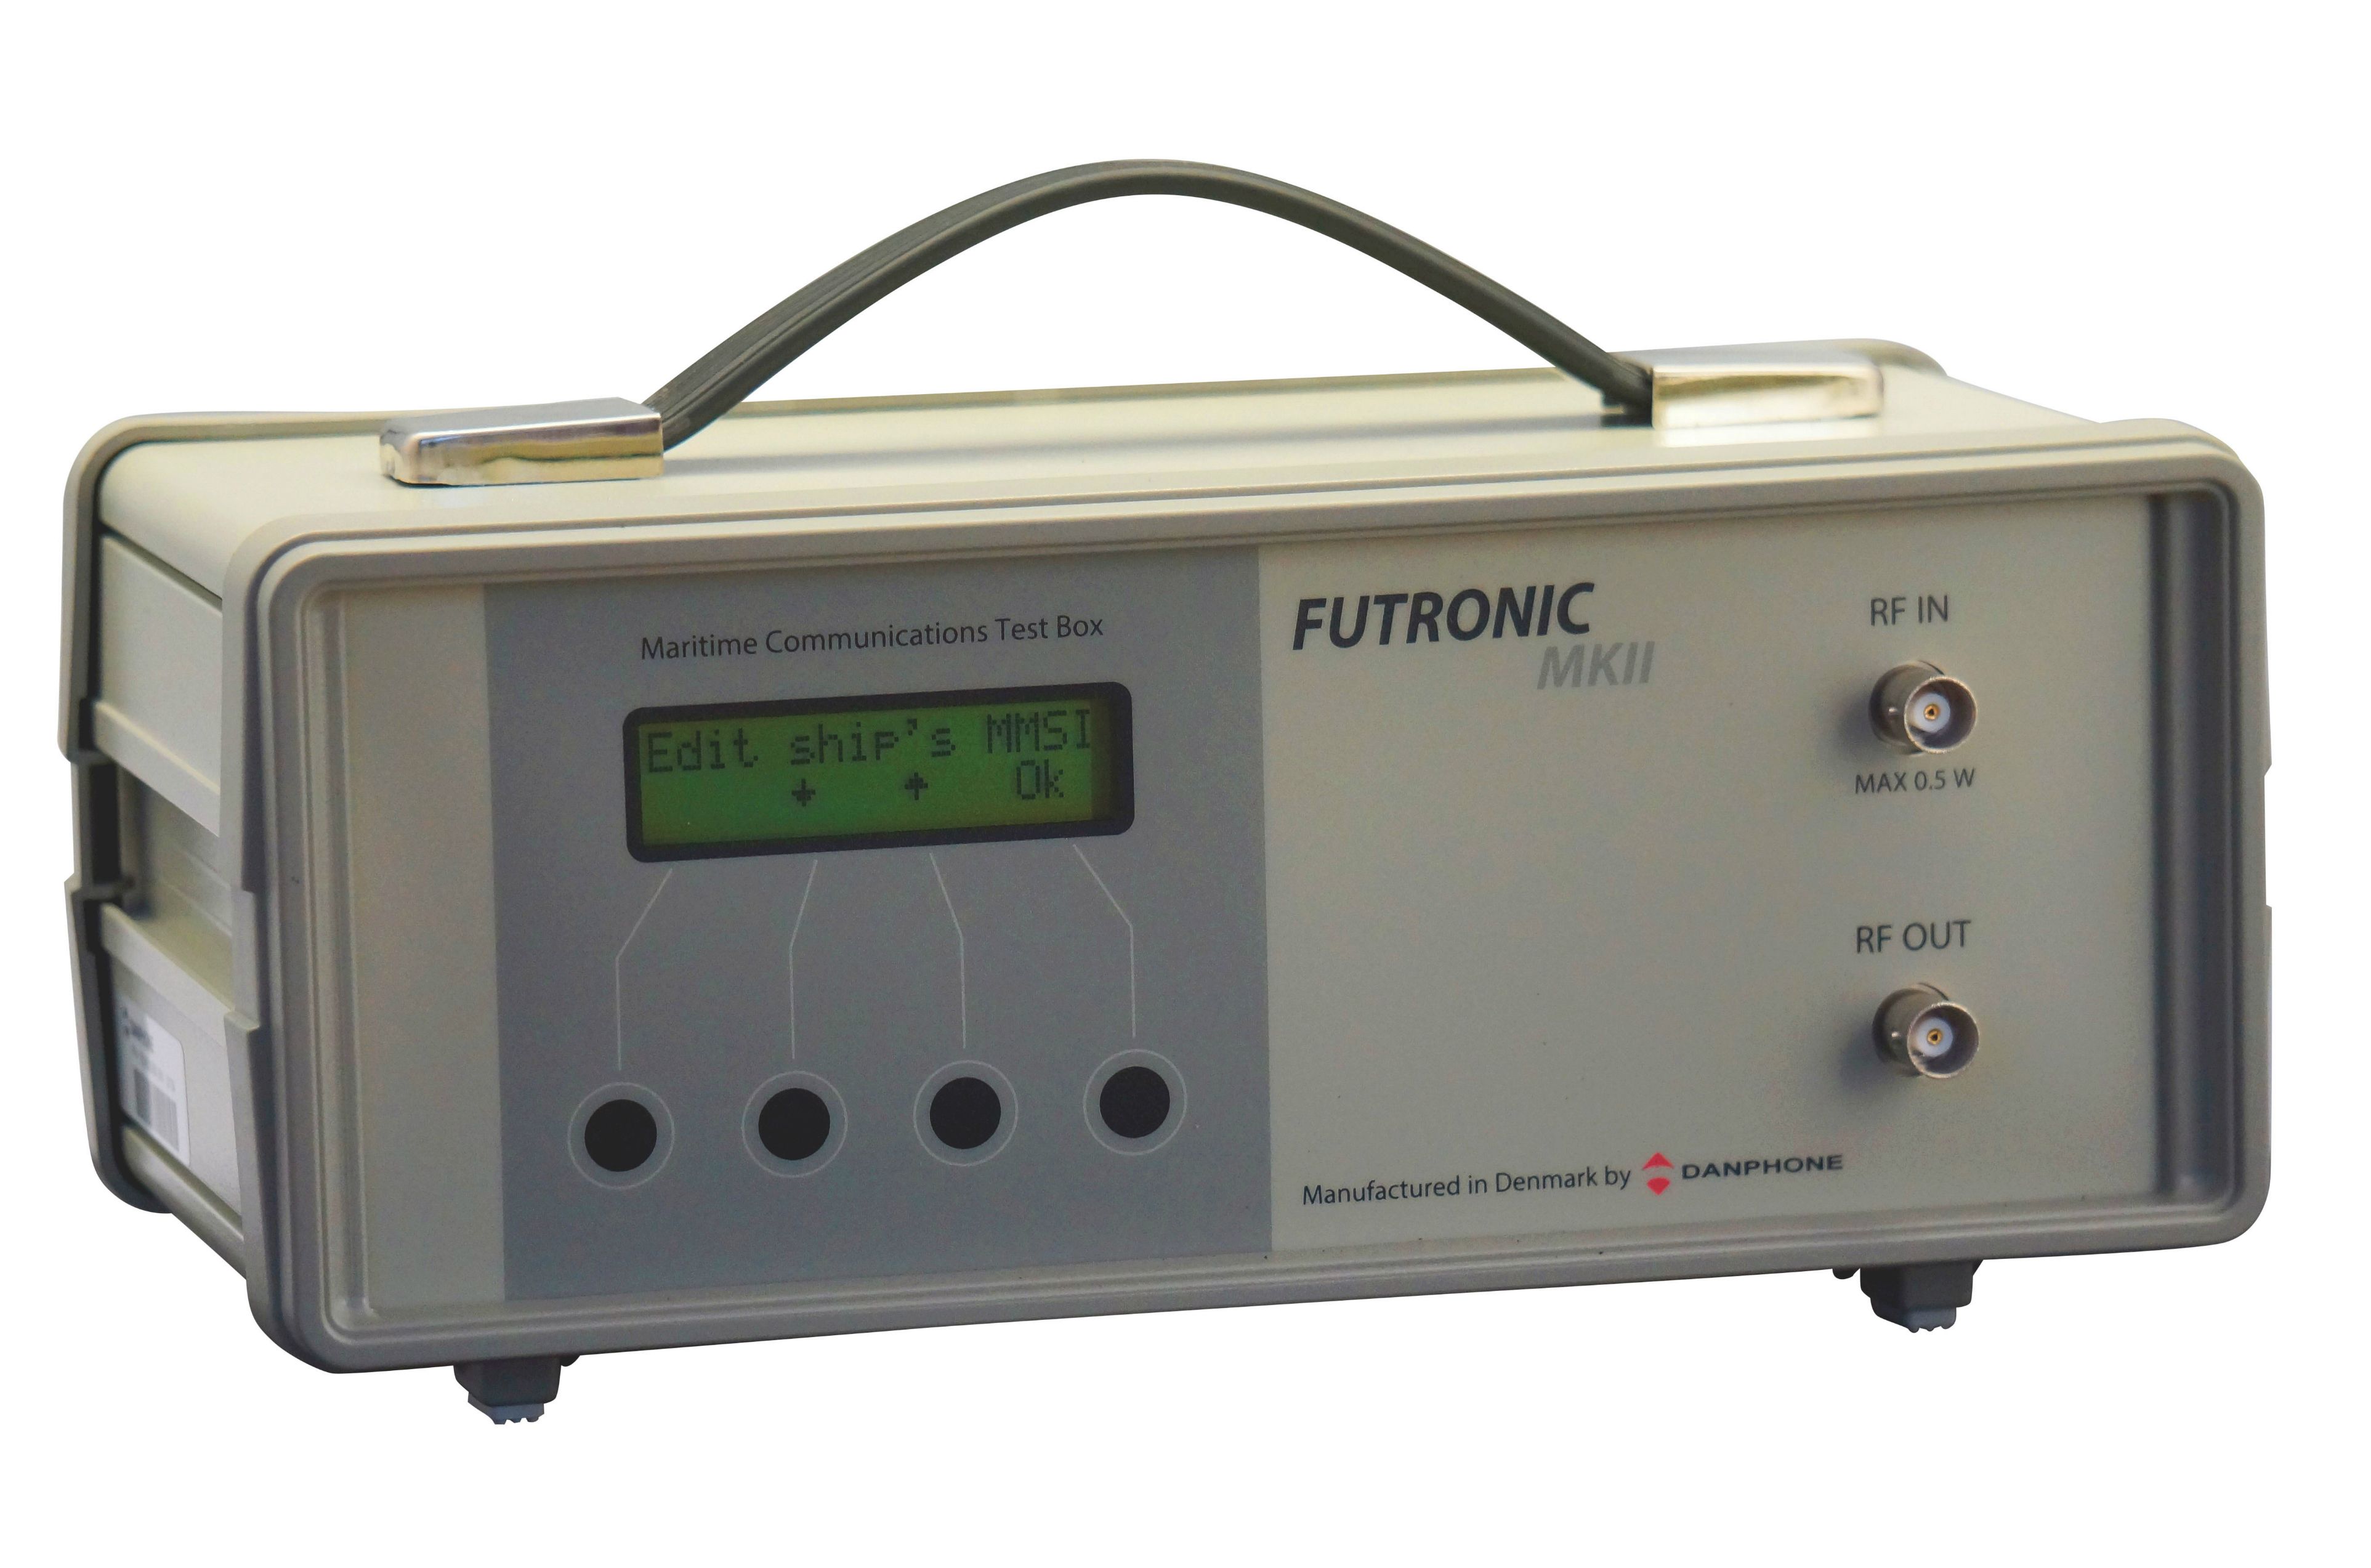 Futronic GMDSS test equipment